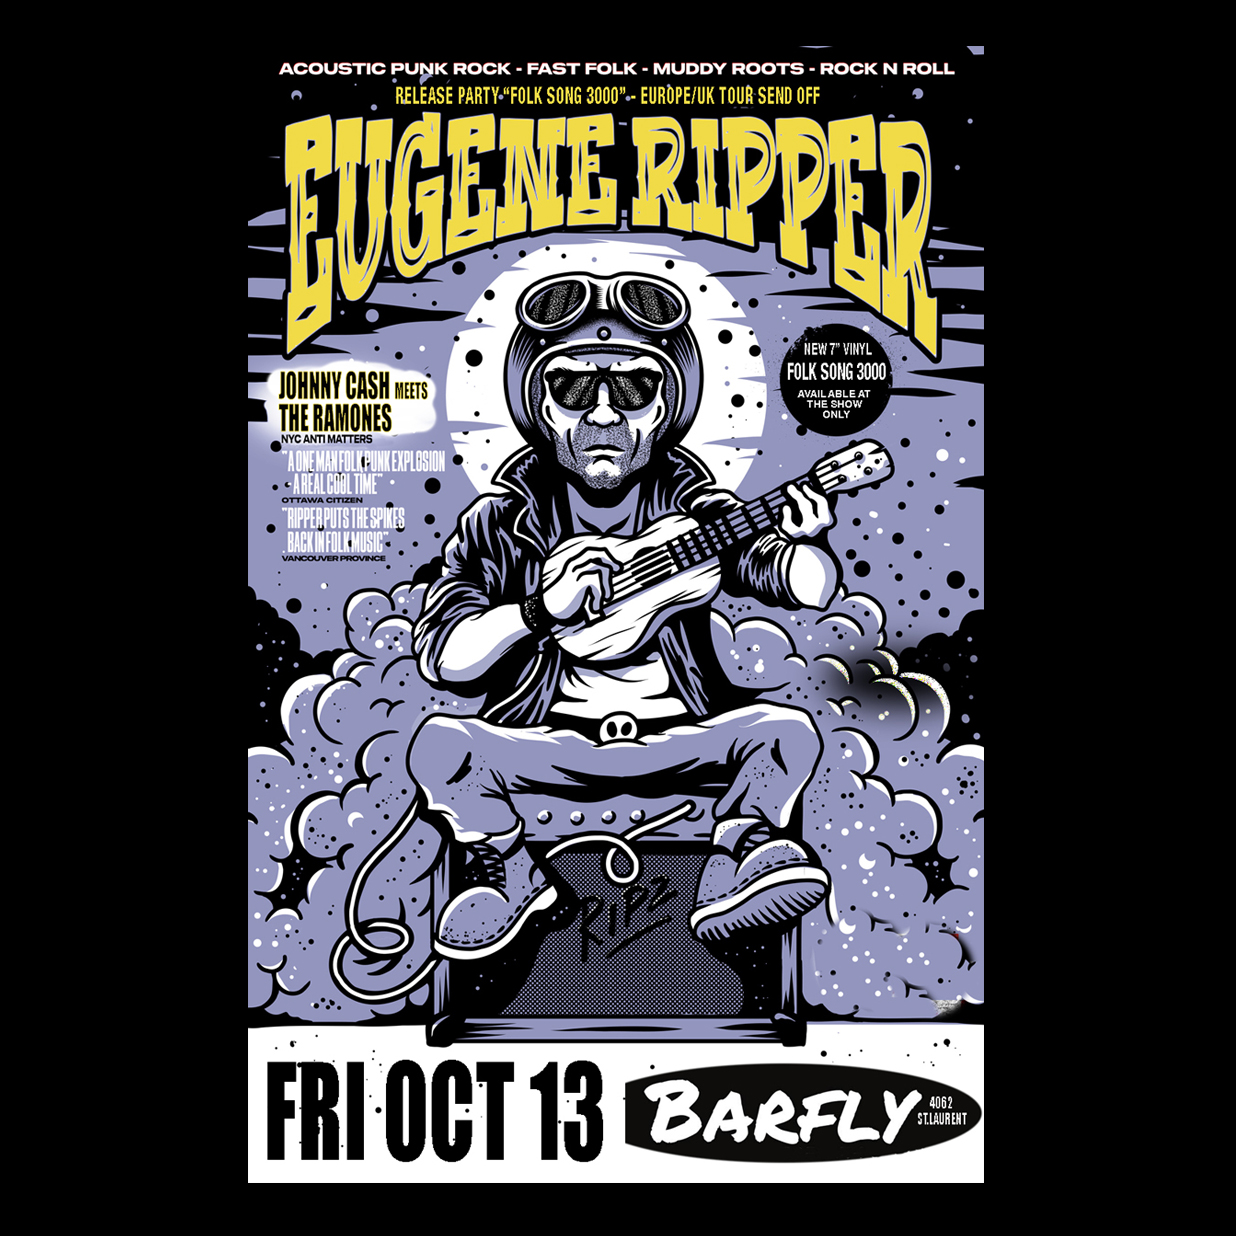 EUGENE RIPPER – acoustic punk, fast folk, garage blues, rock and roll !